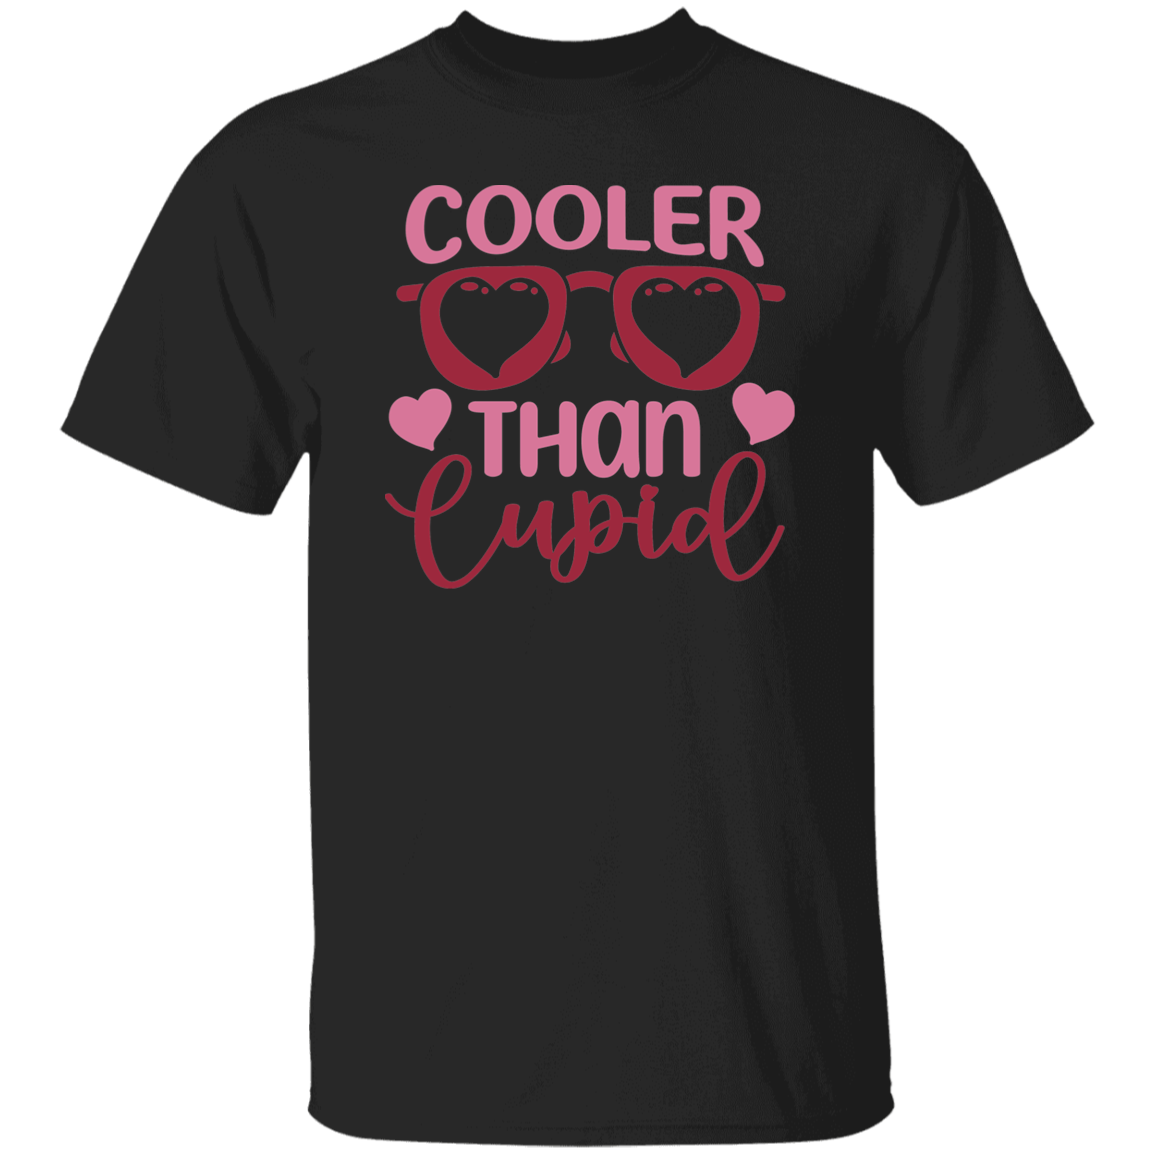 Cupid T-Shirt